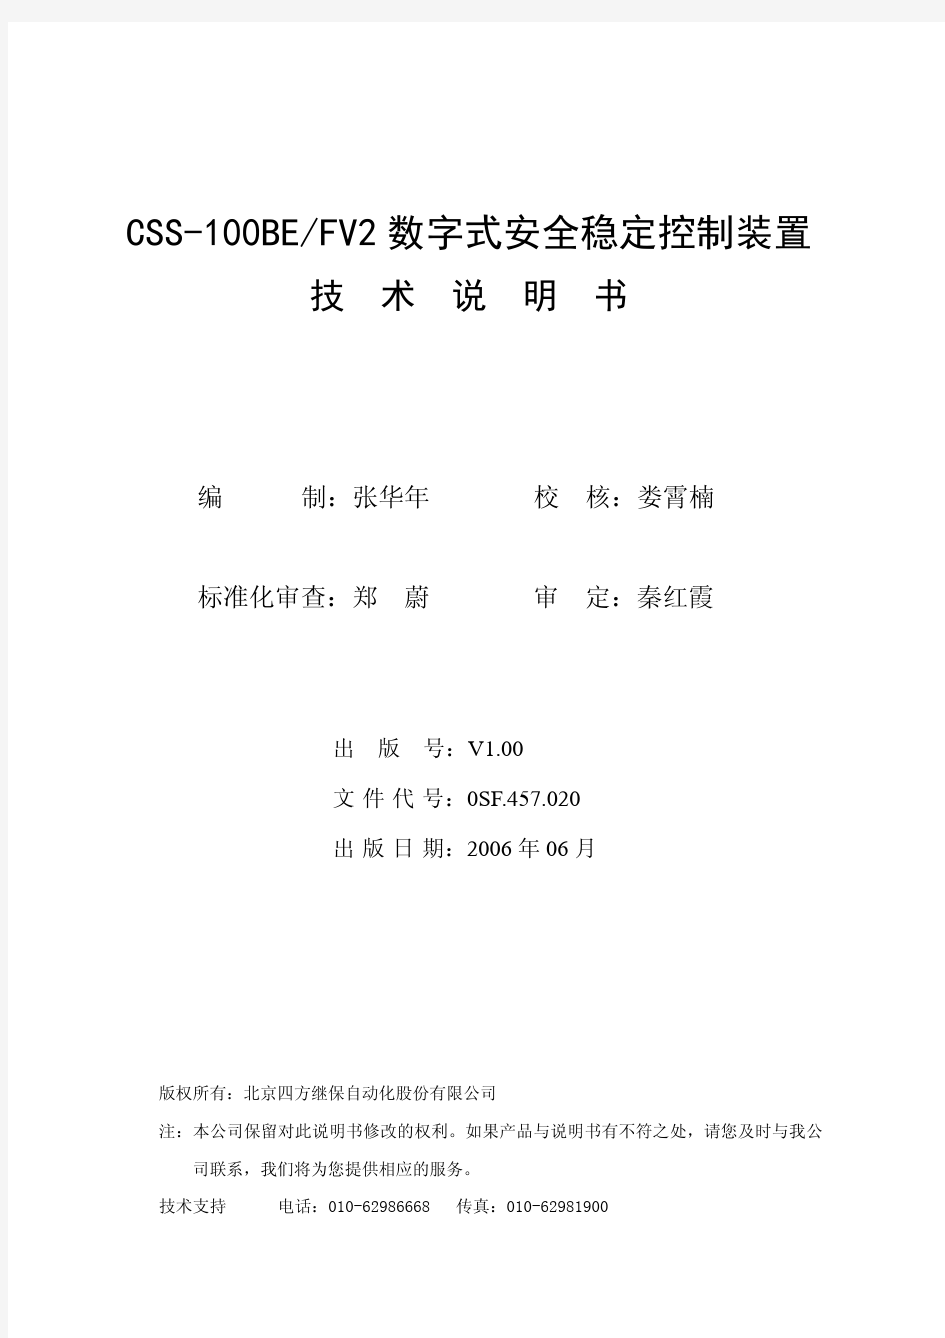 CSS-100BE(FV2)数字式安全稳定控制装置技术说明书(0SF.457.020)_V1.0